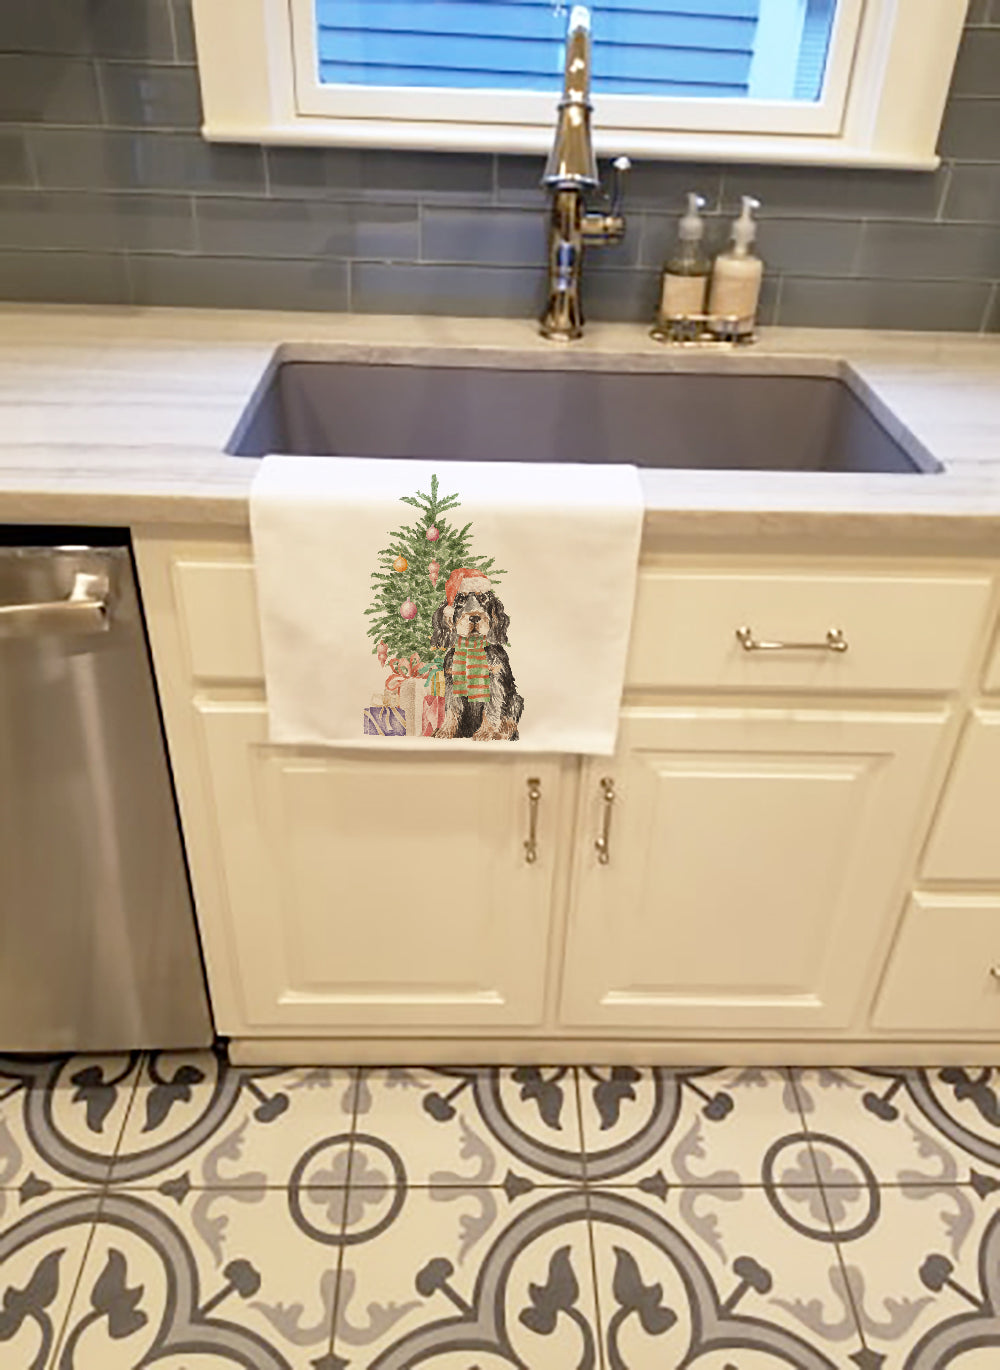 Buy this Cocker Spaniel English Black Tan Christmas Presents and Tree White Kitchen Towel Set of 2